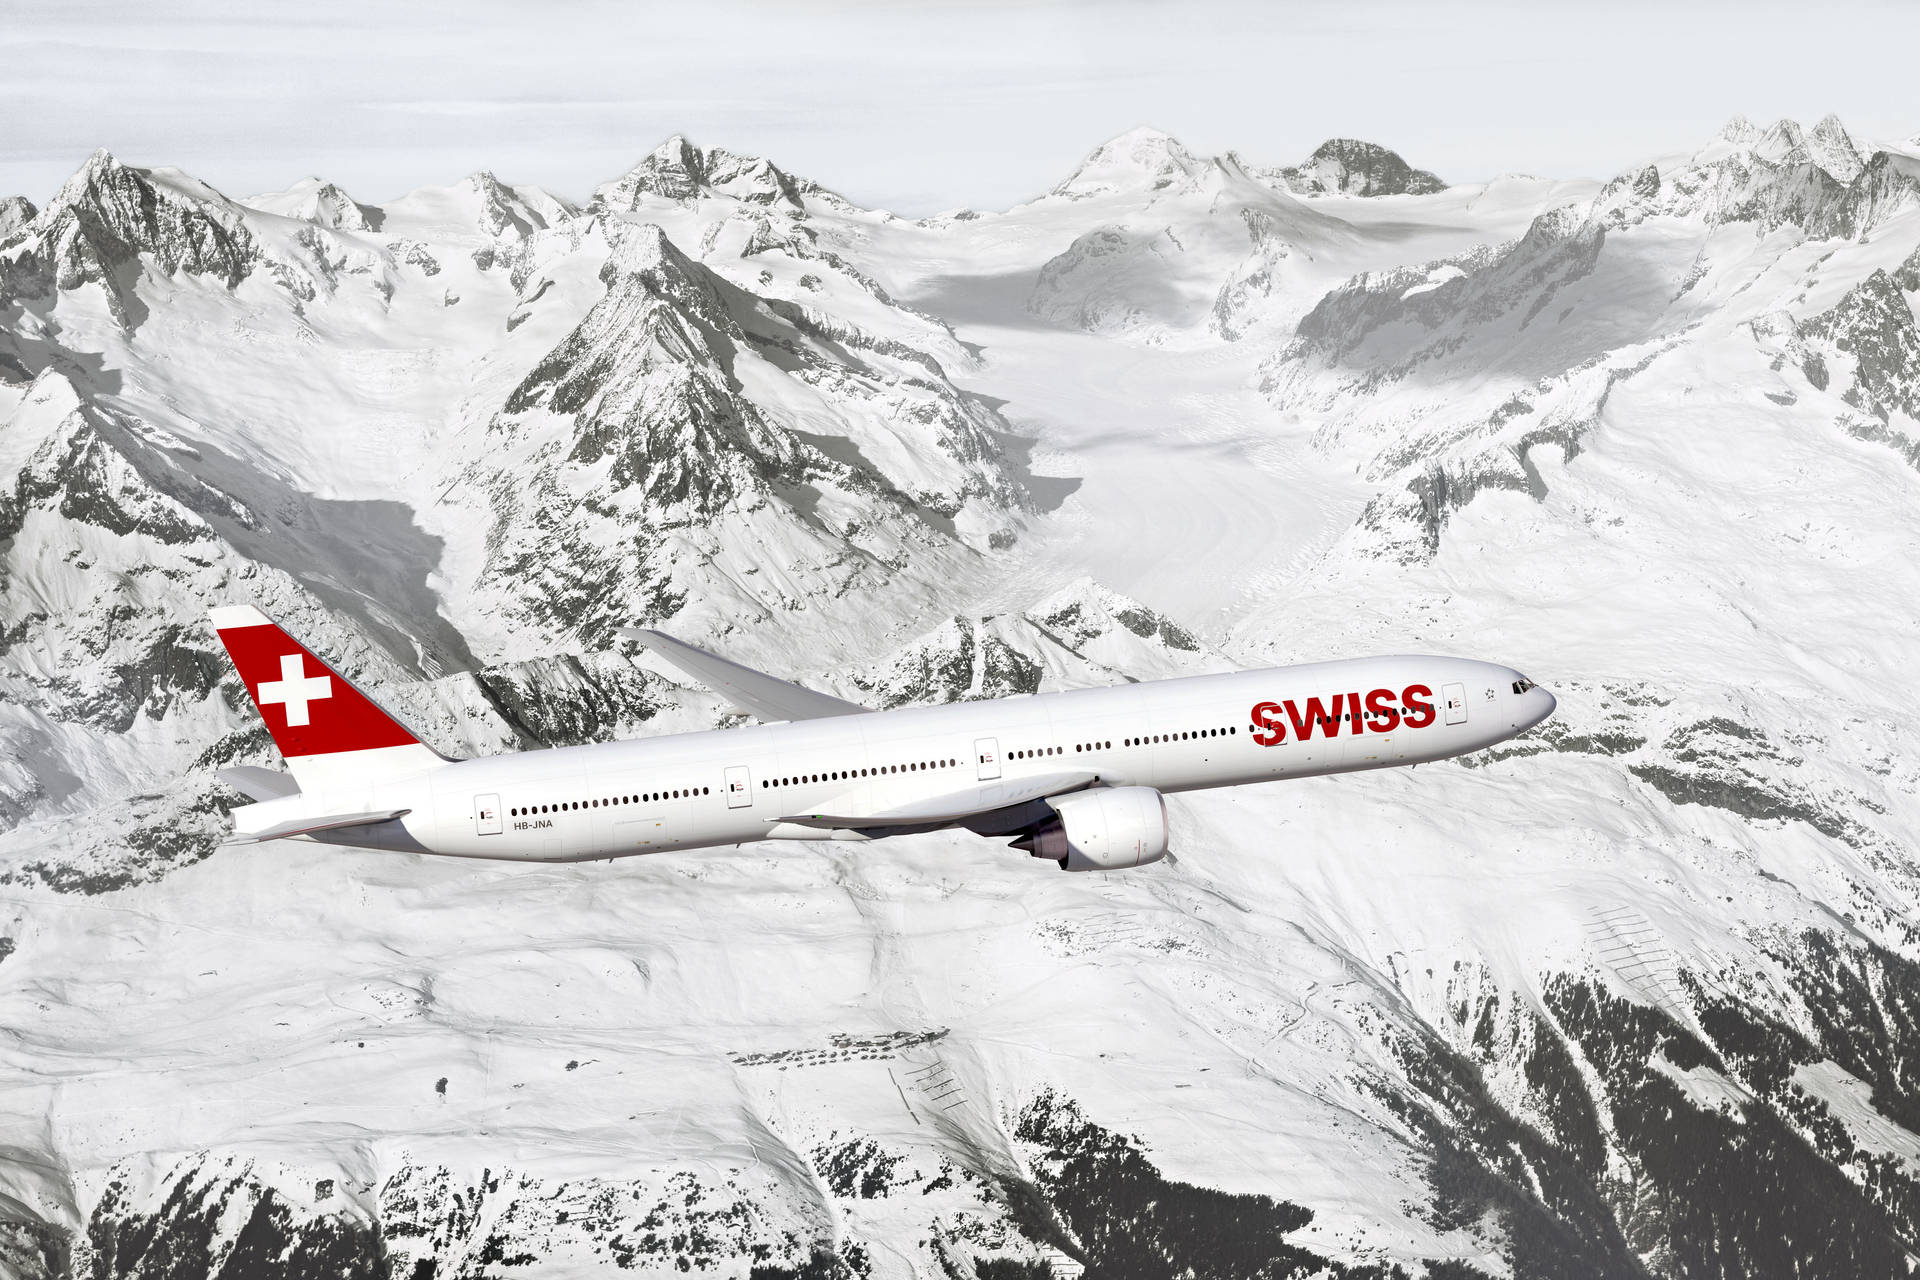 Hd Plane Swiss Airline